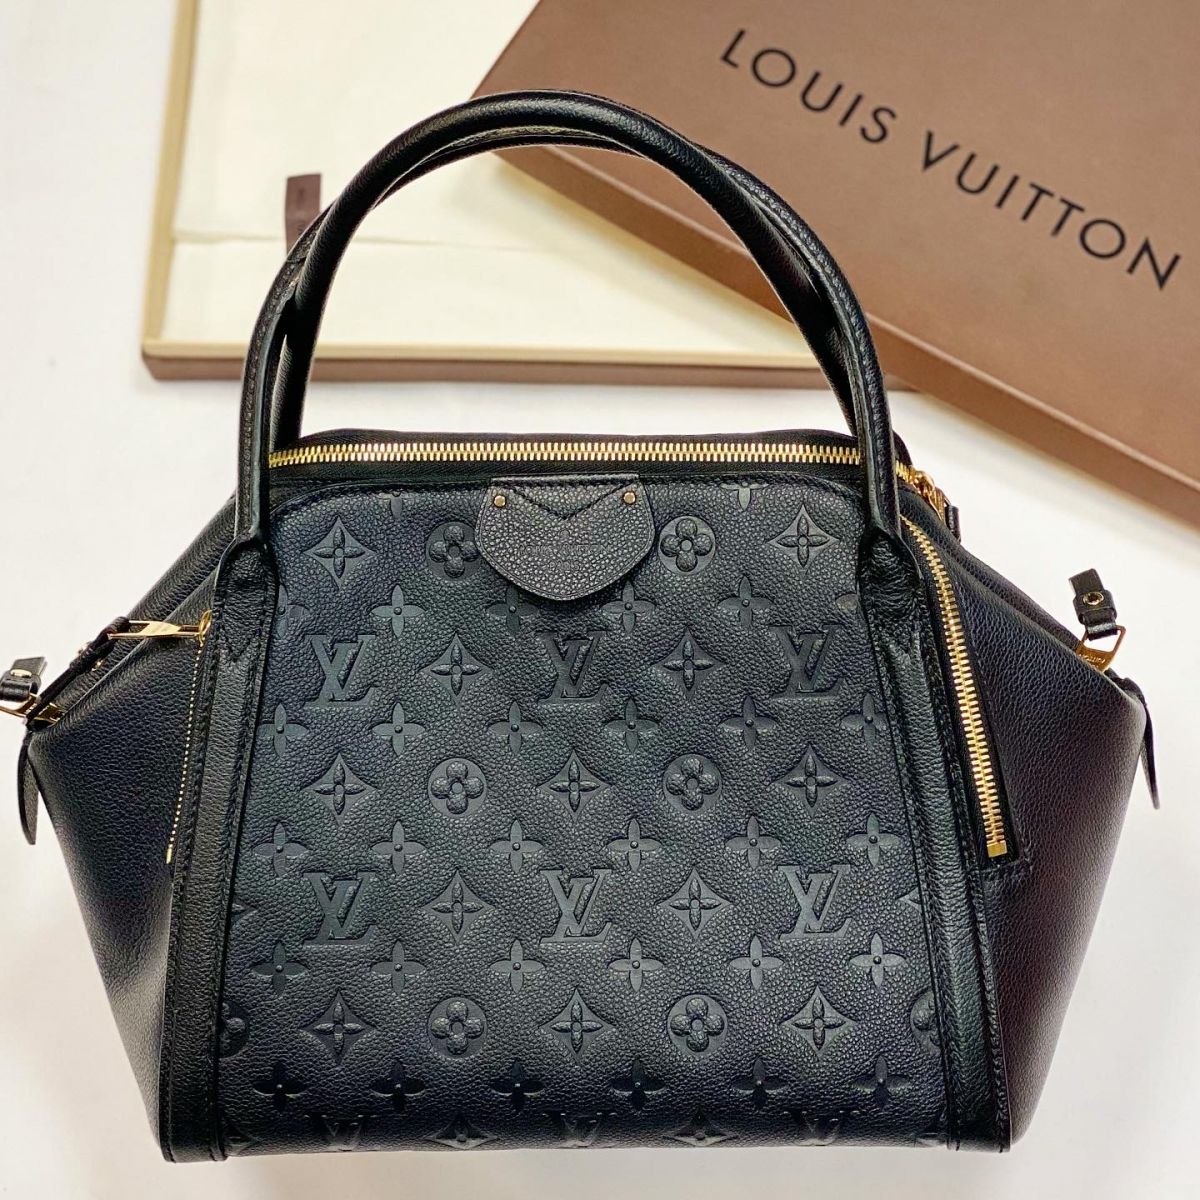 Сумка Louis Vuitton размер 28/20 цена 61 540 руб 